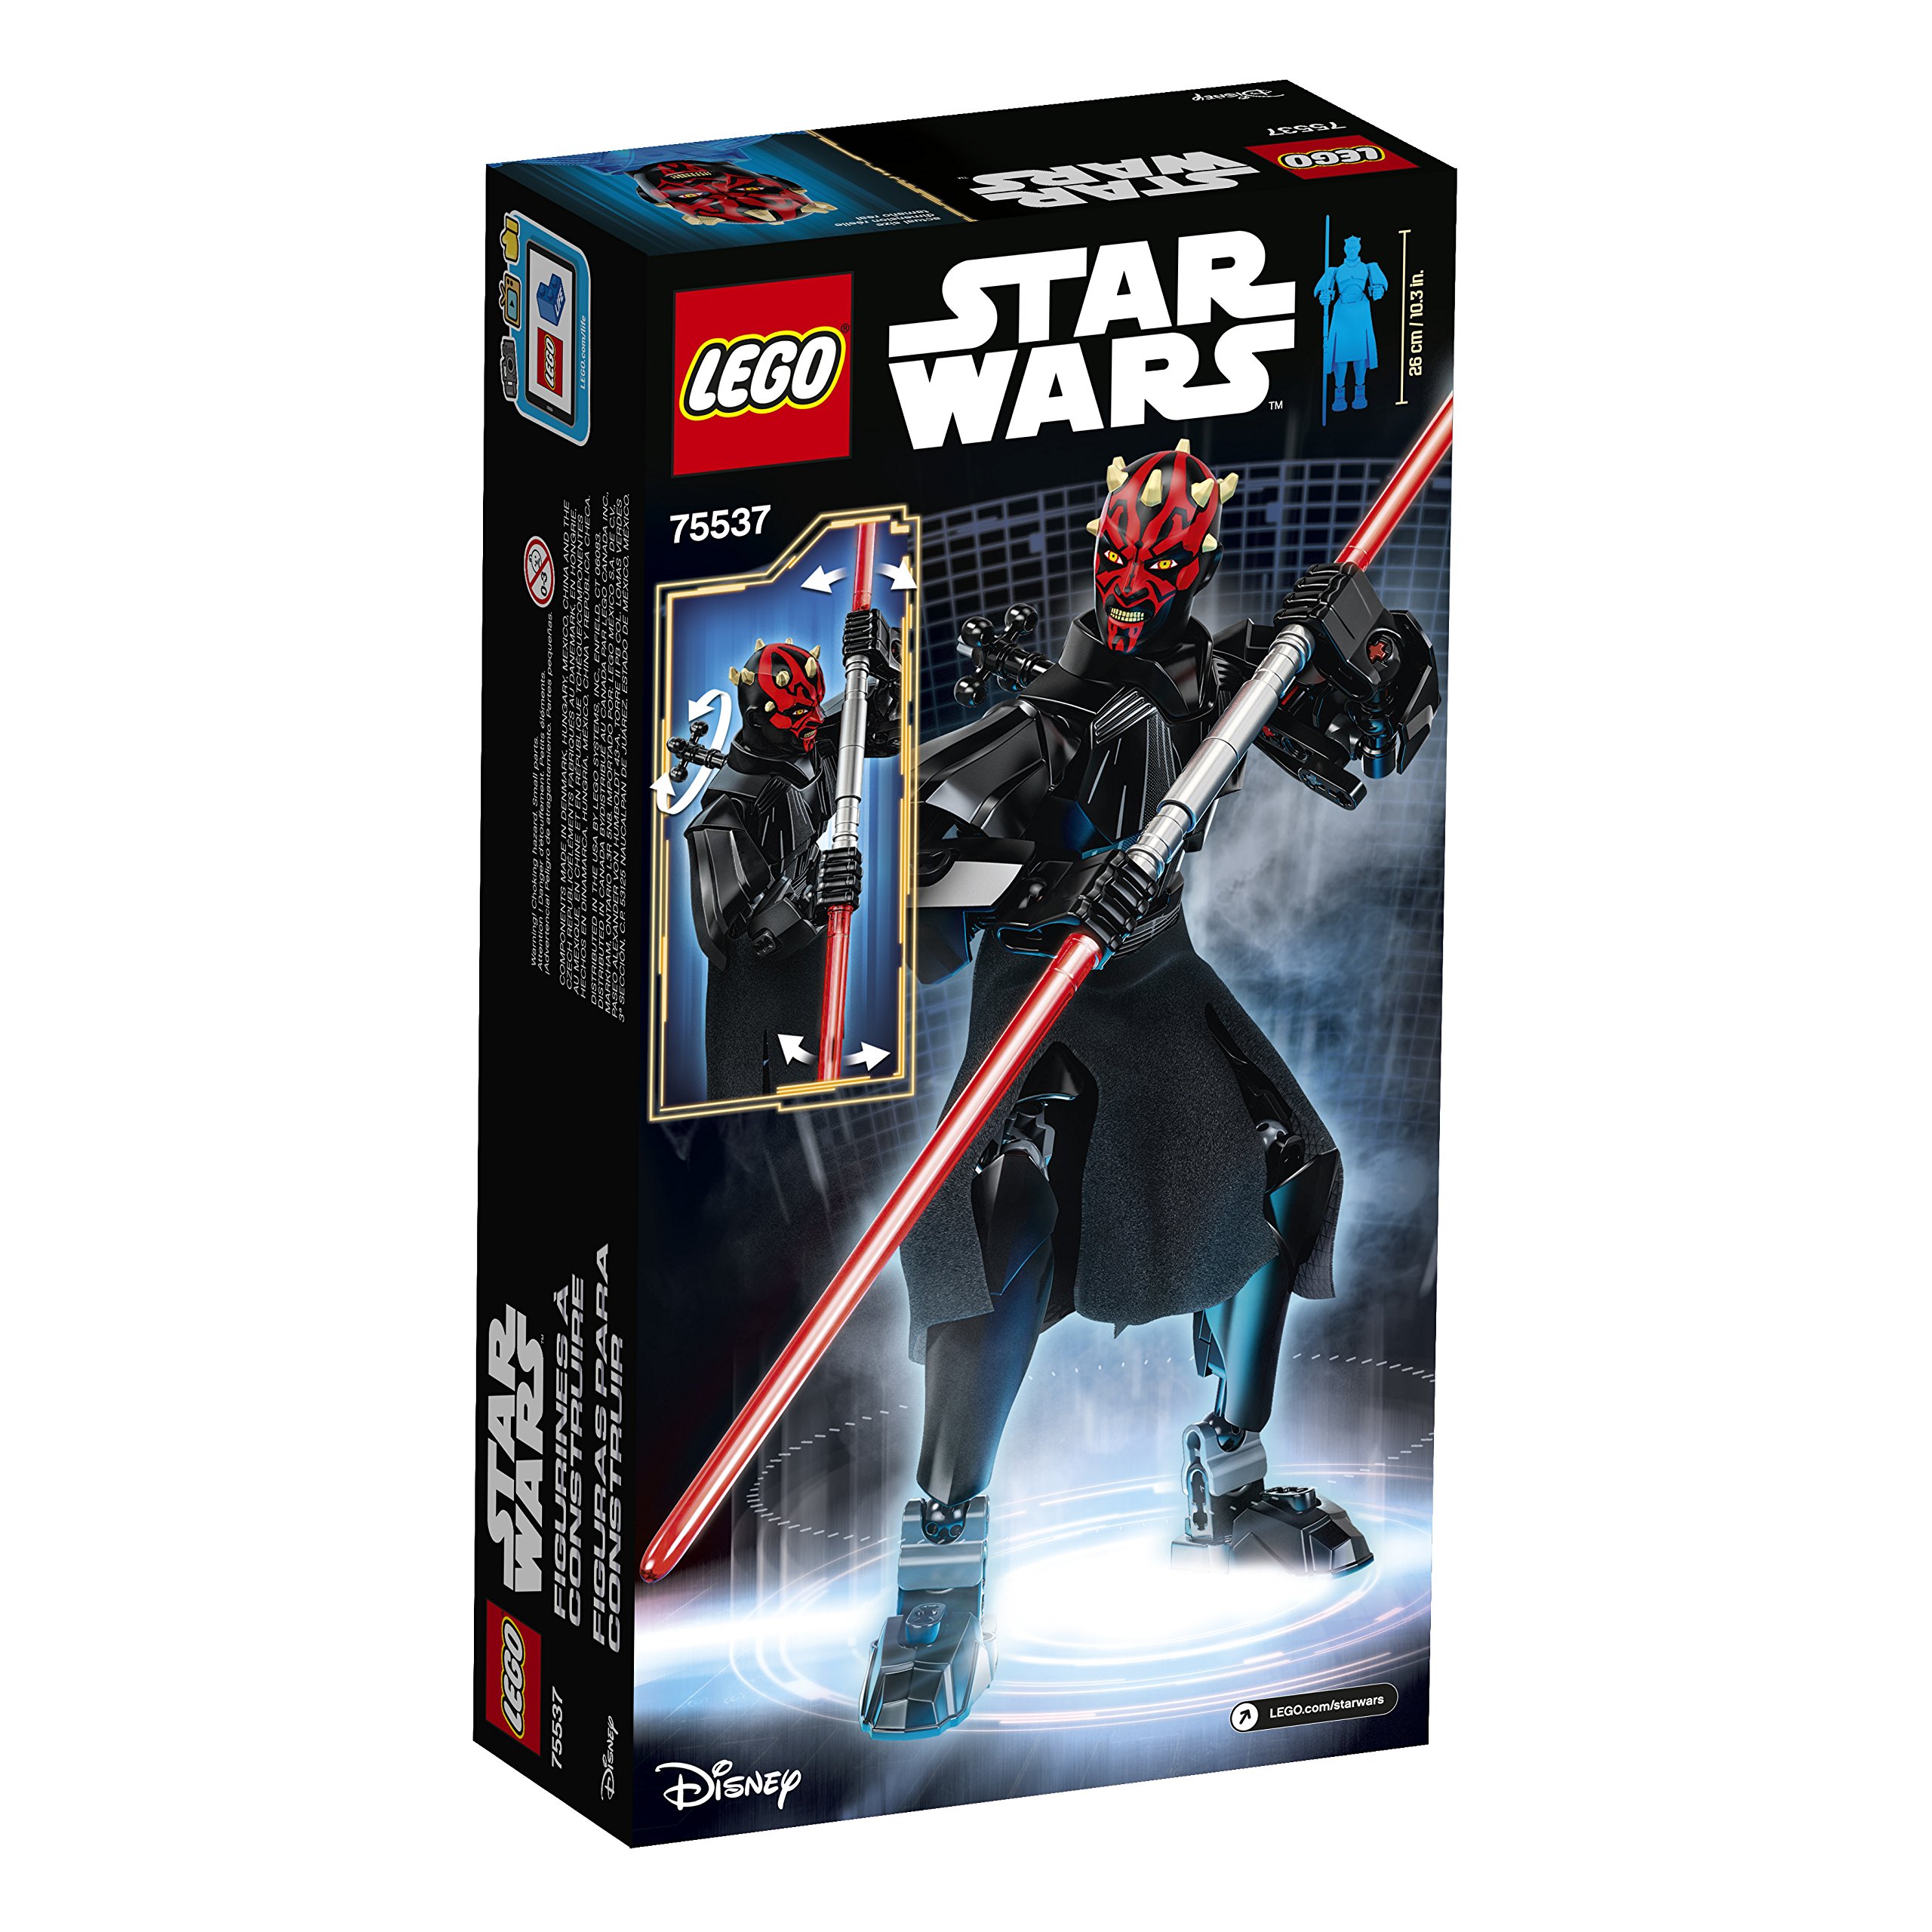 LEGO Star Wars Darth Maul 75537 Building Kit (104 Piece)